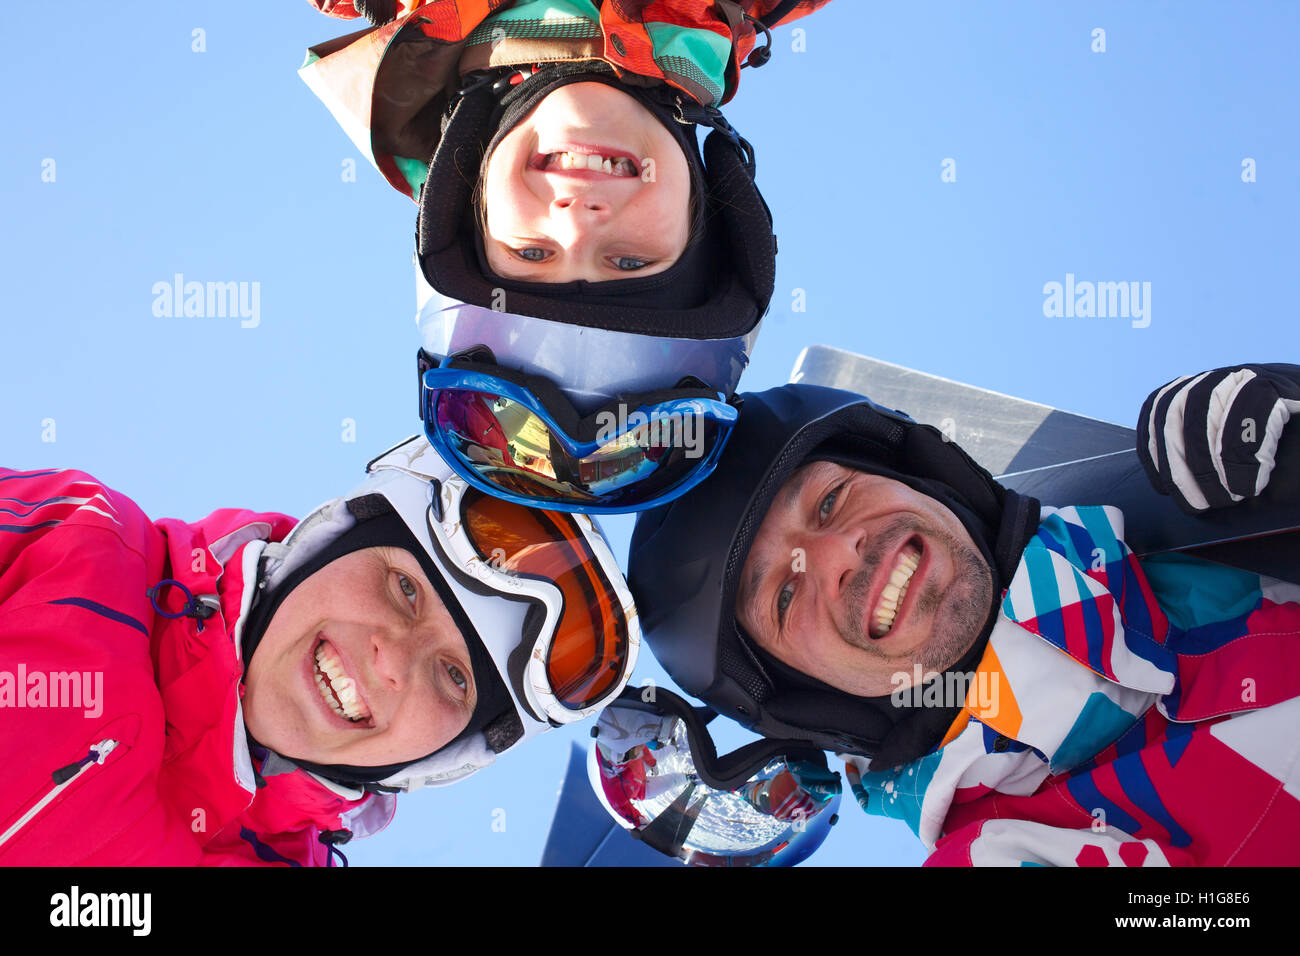 Skiing, winter fun - skiers enjoying ski holidays Stock Photo